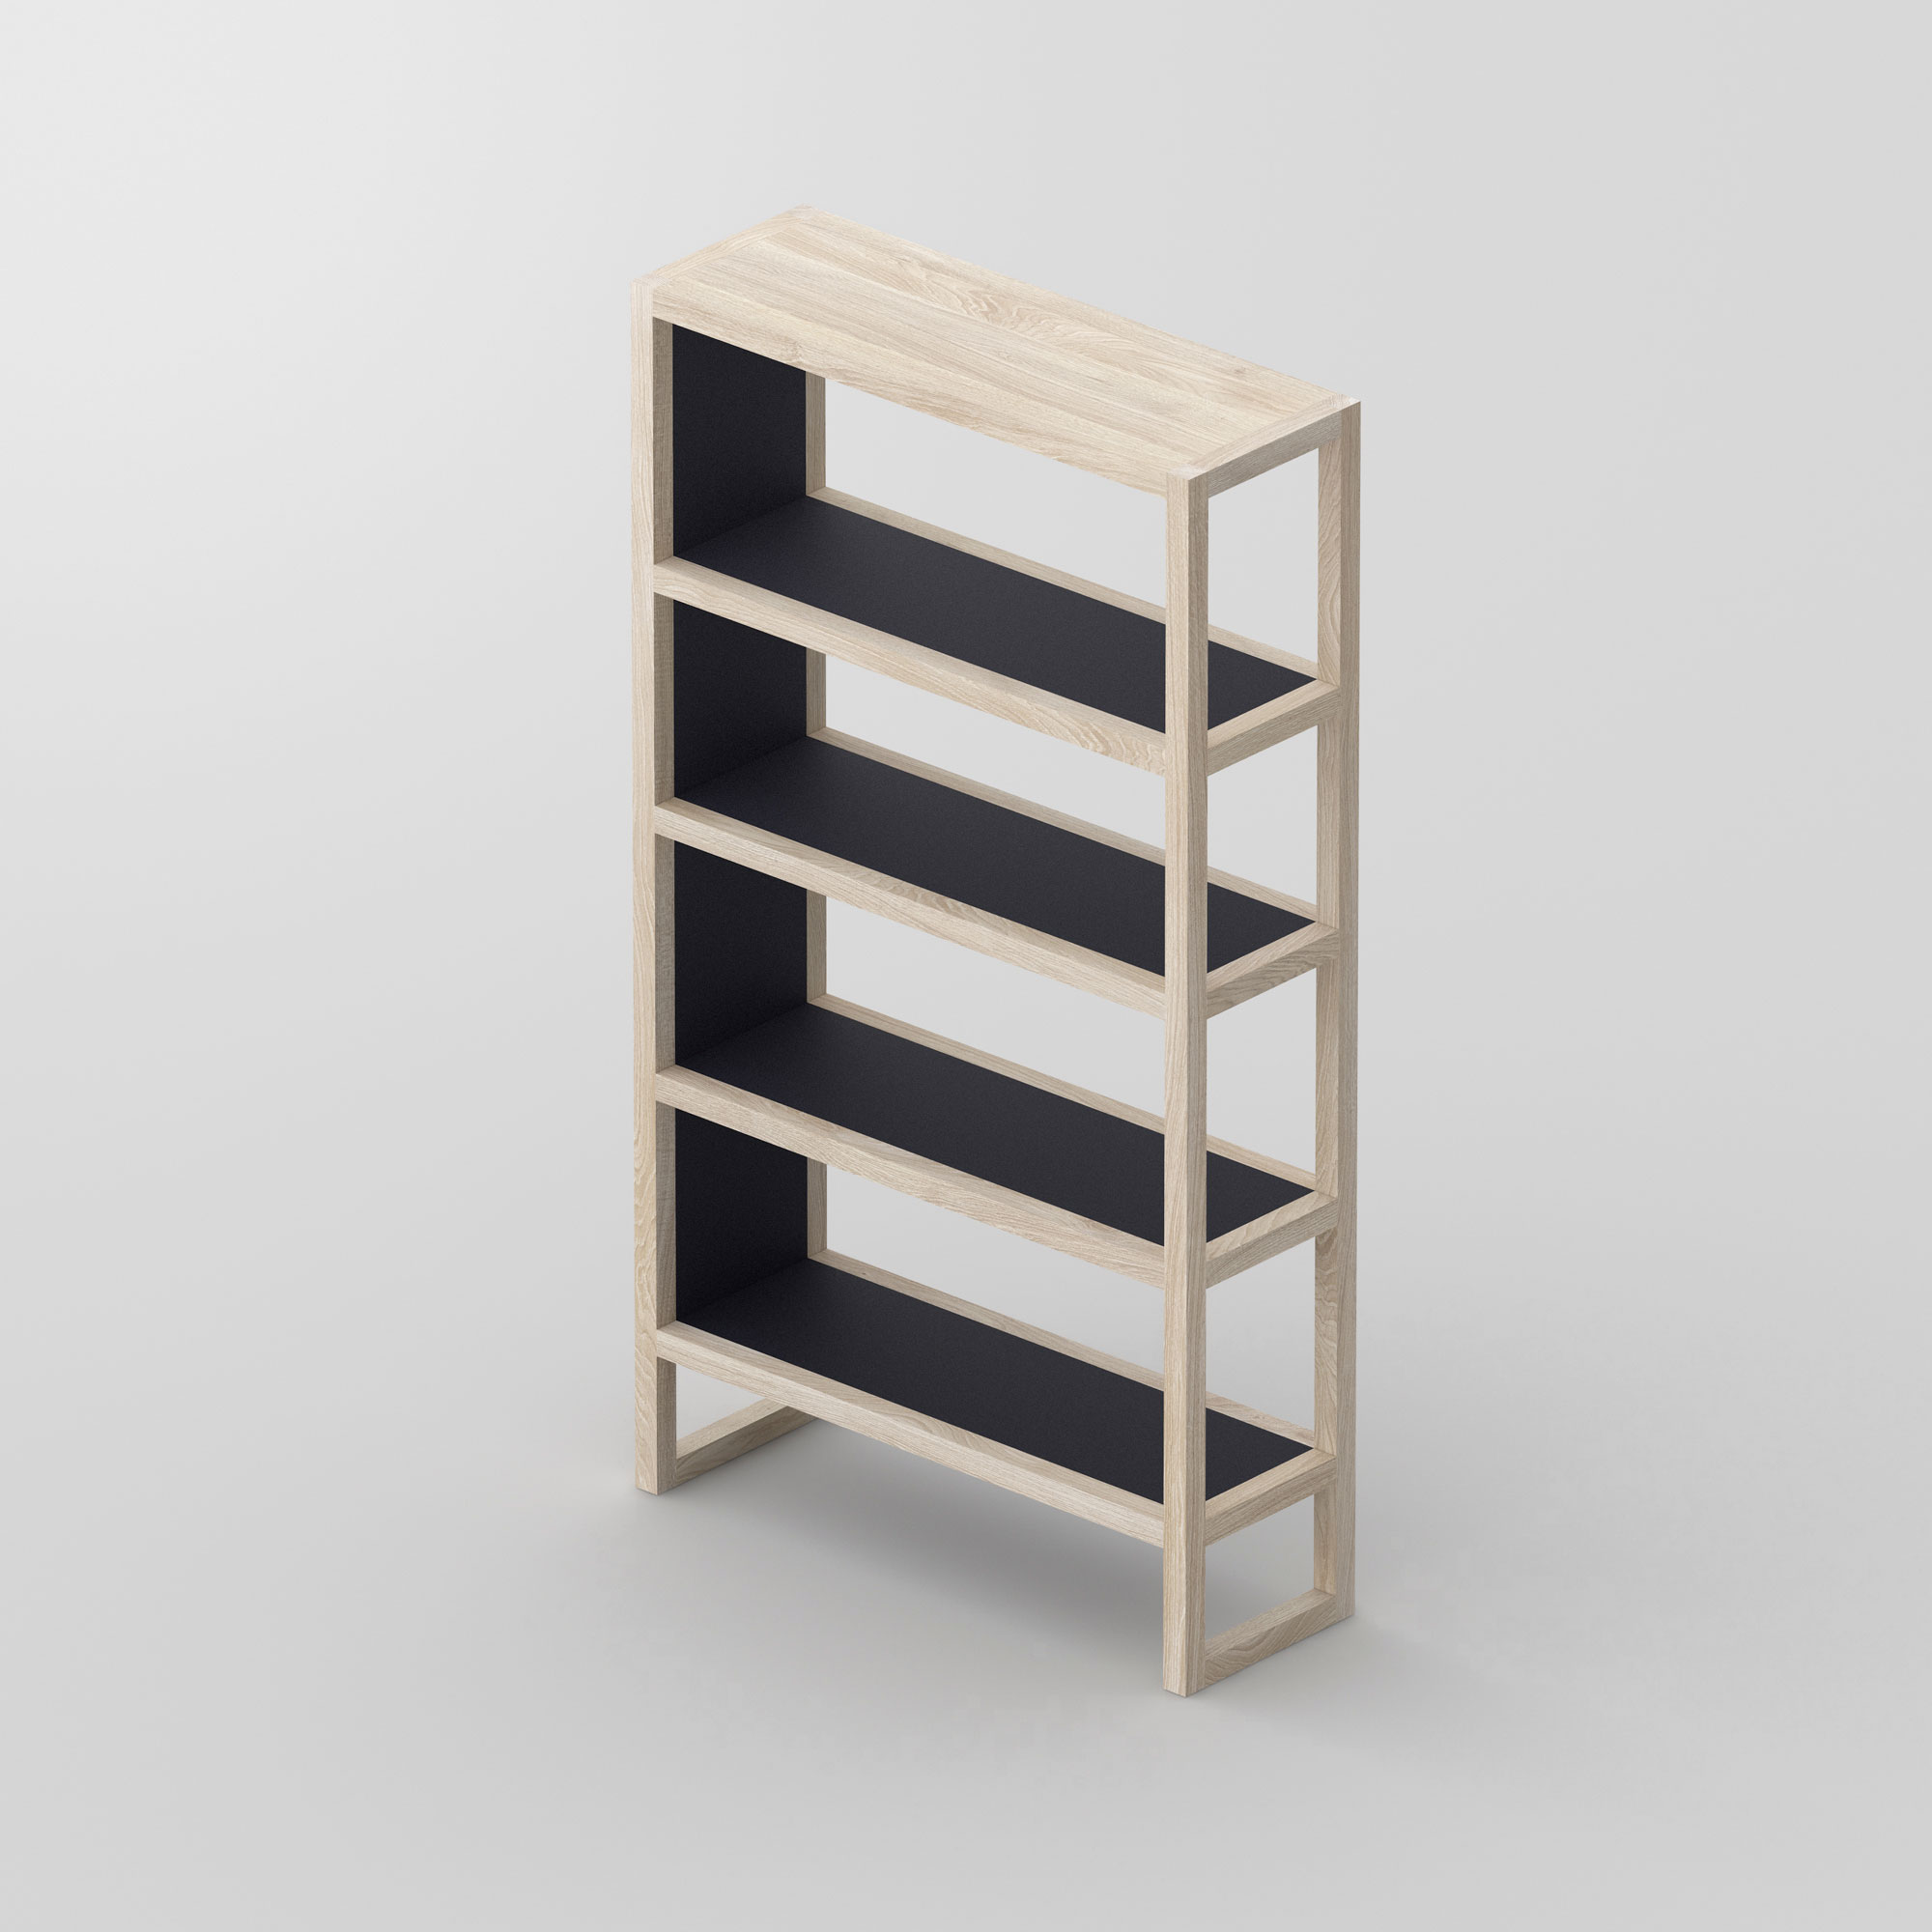 Linoleum Wood Shelf SENA cam3 custom made in solid wood by vitamin design